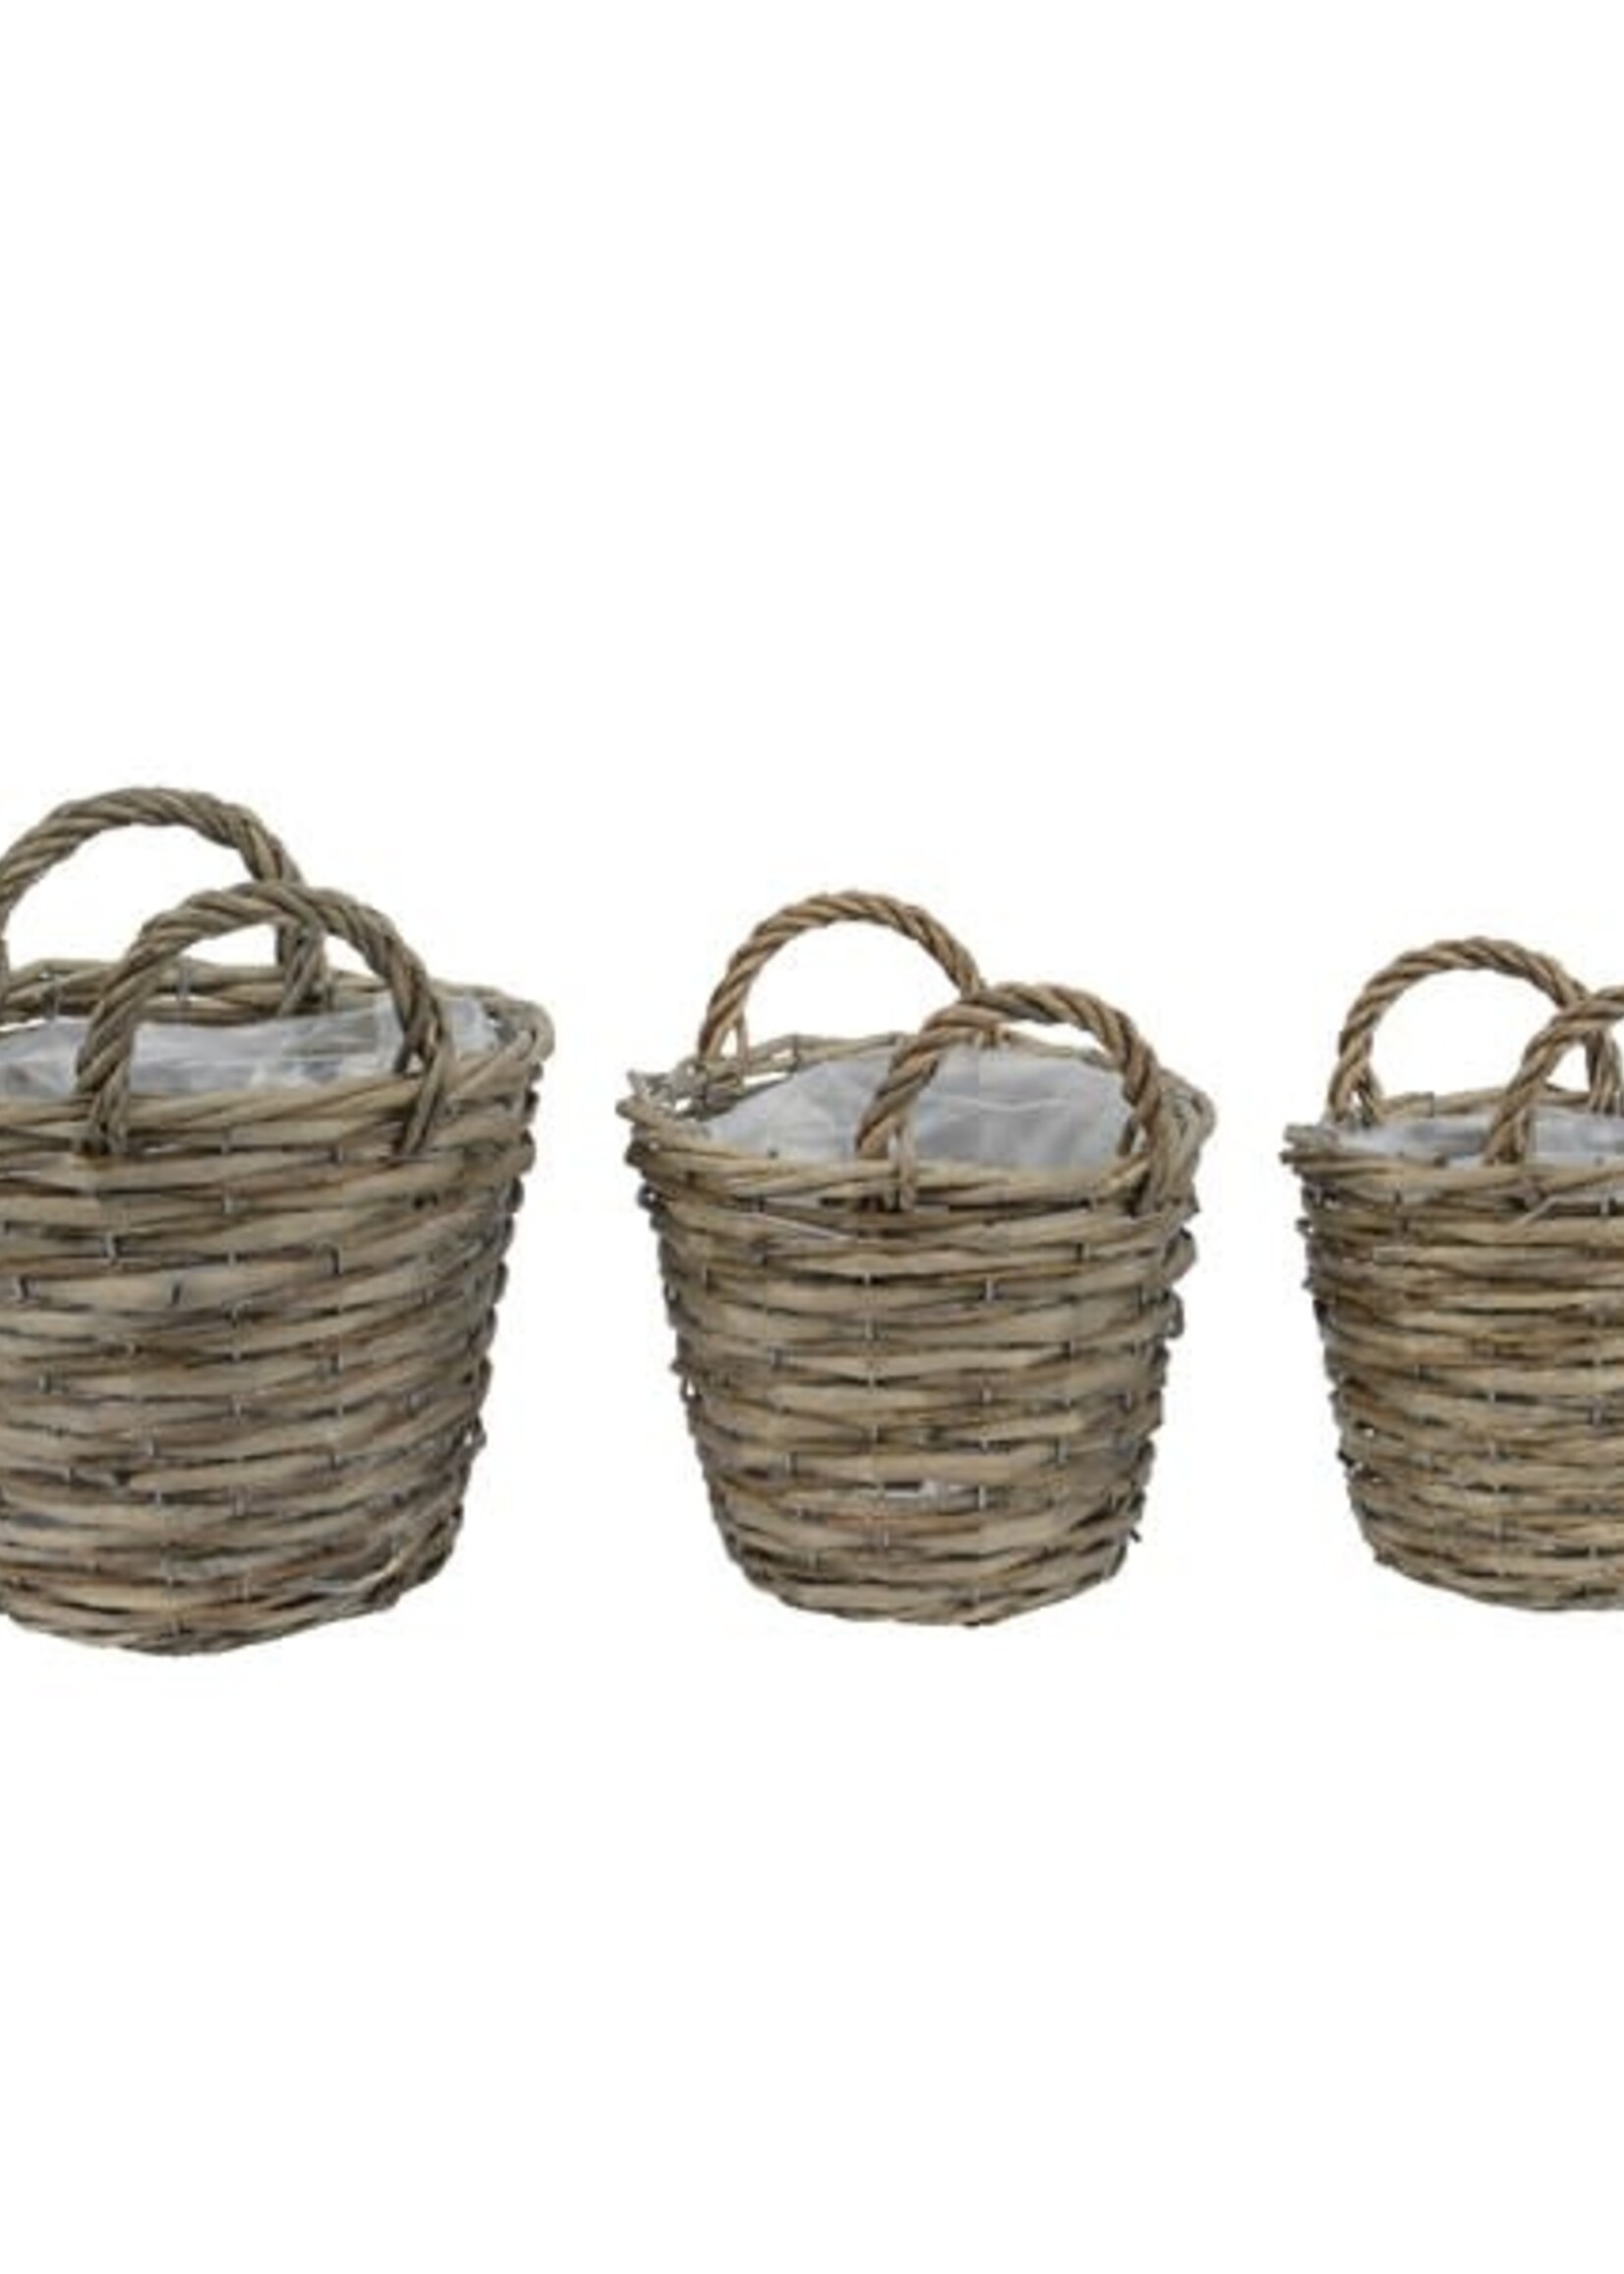 Decoris Basket willow round Small